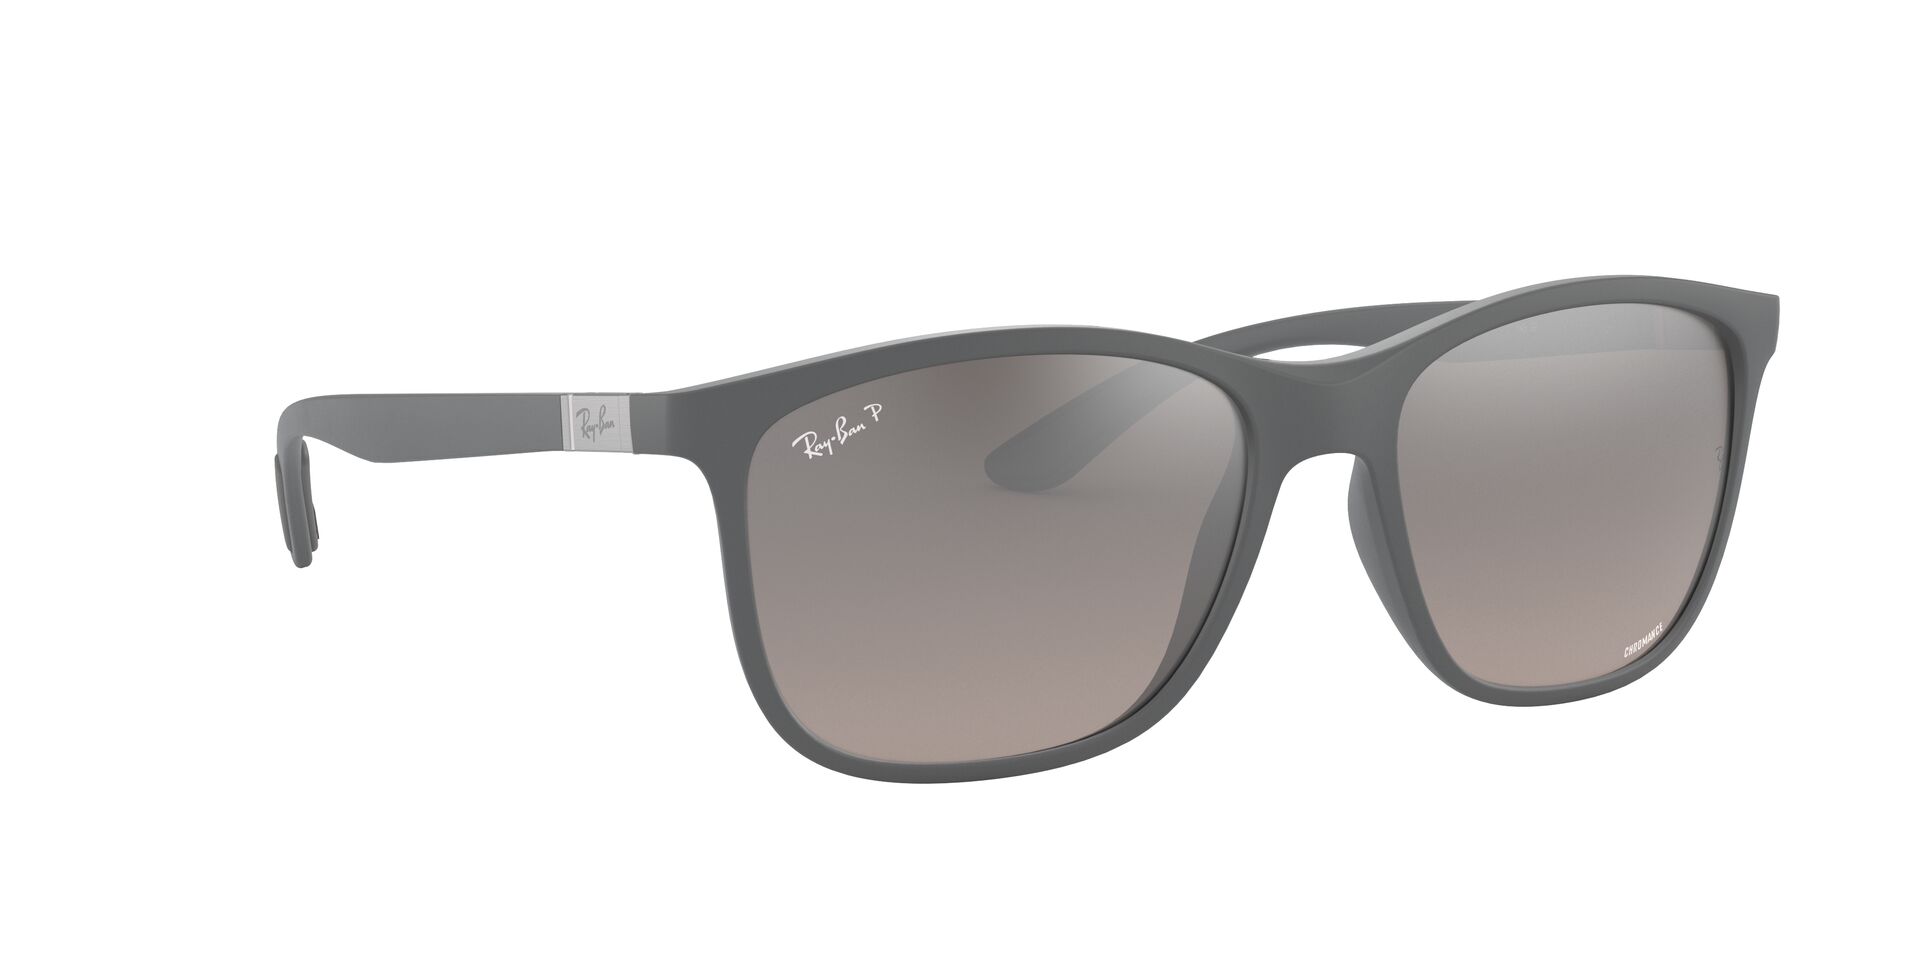 Buy Ray-Ban Rb4330 Chromance Sunglasses Online.